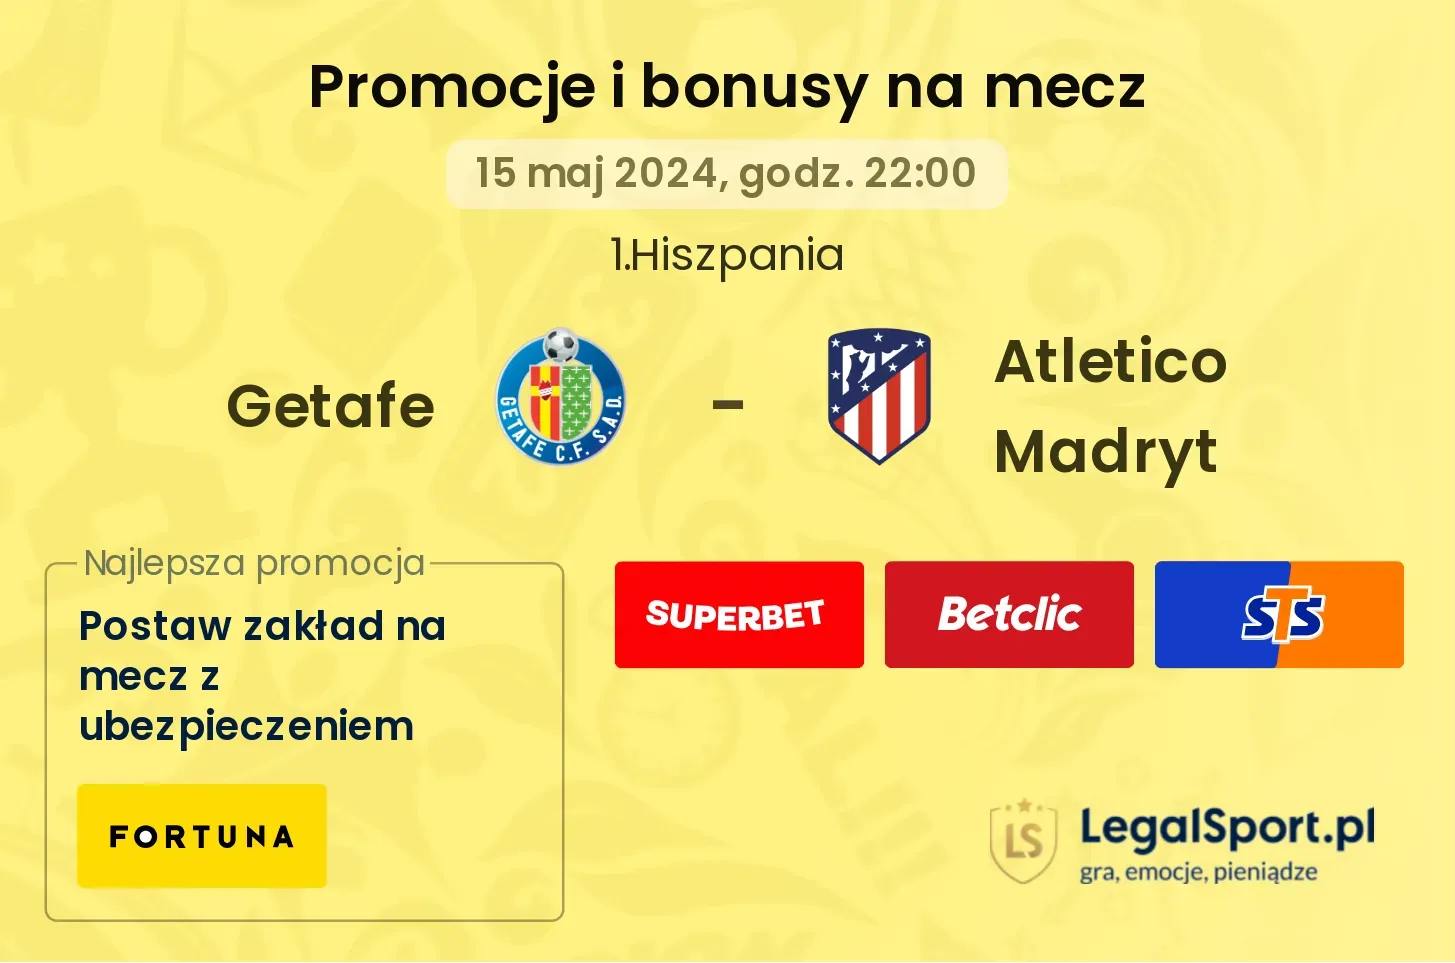 Getafe - Atletico Madryt promocje bonusy na mecz